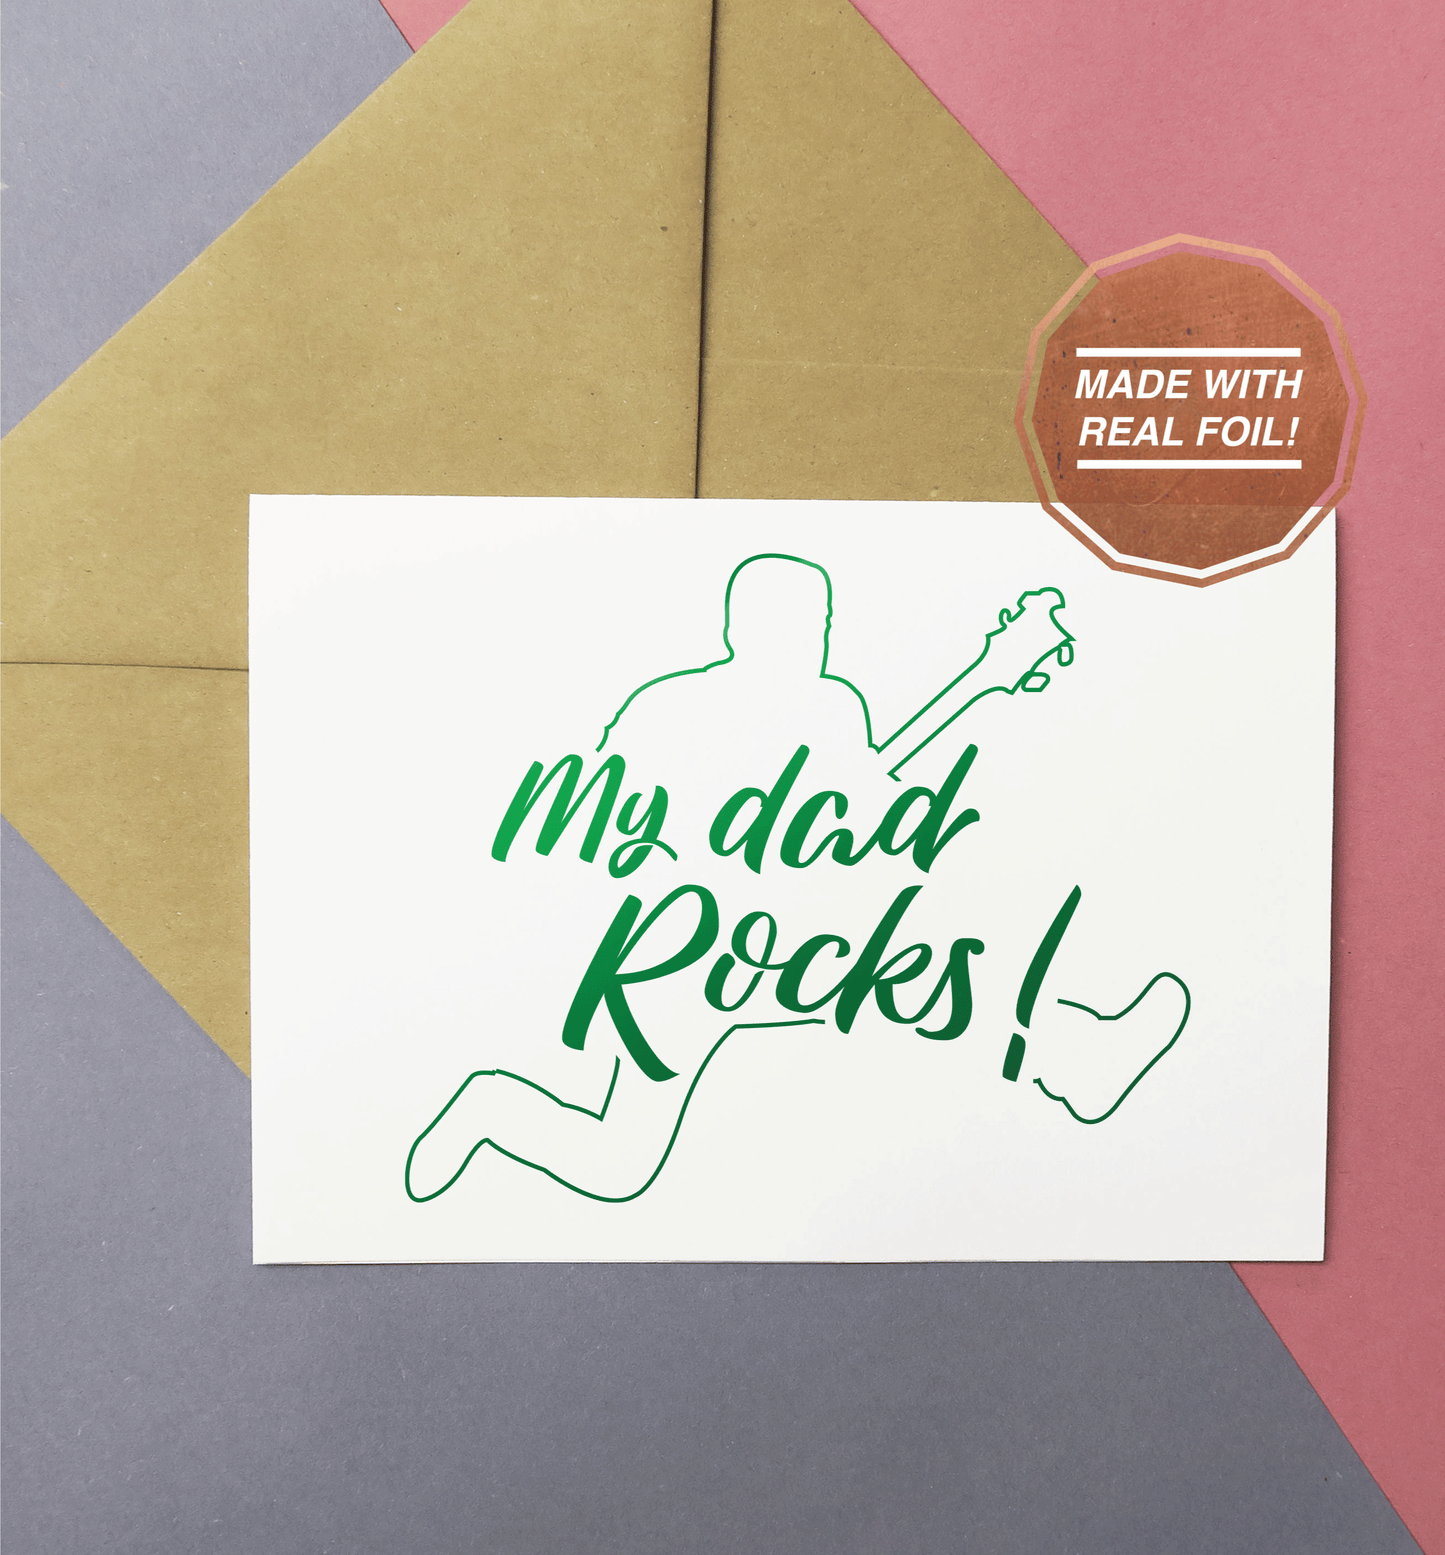 My dad rocks | Foiled print / greeting card